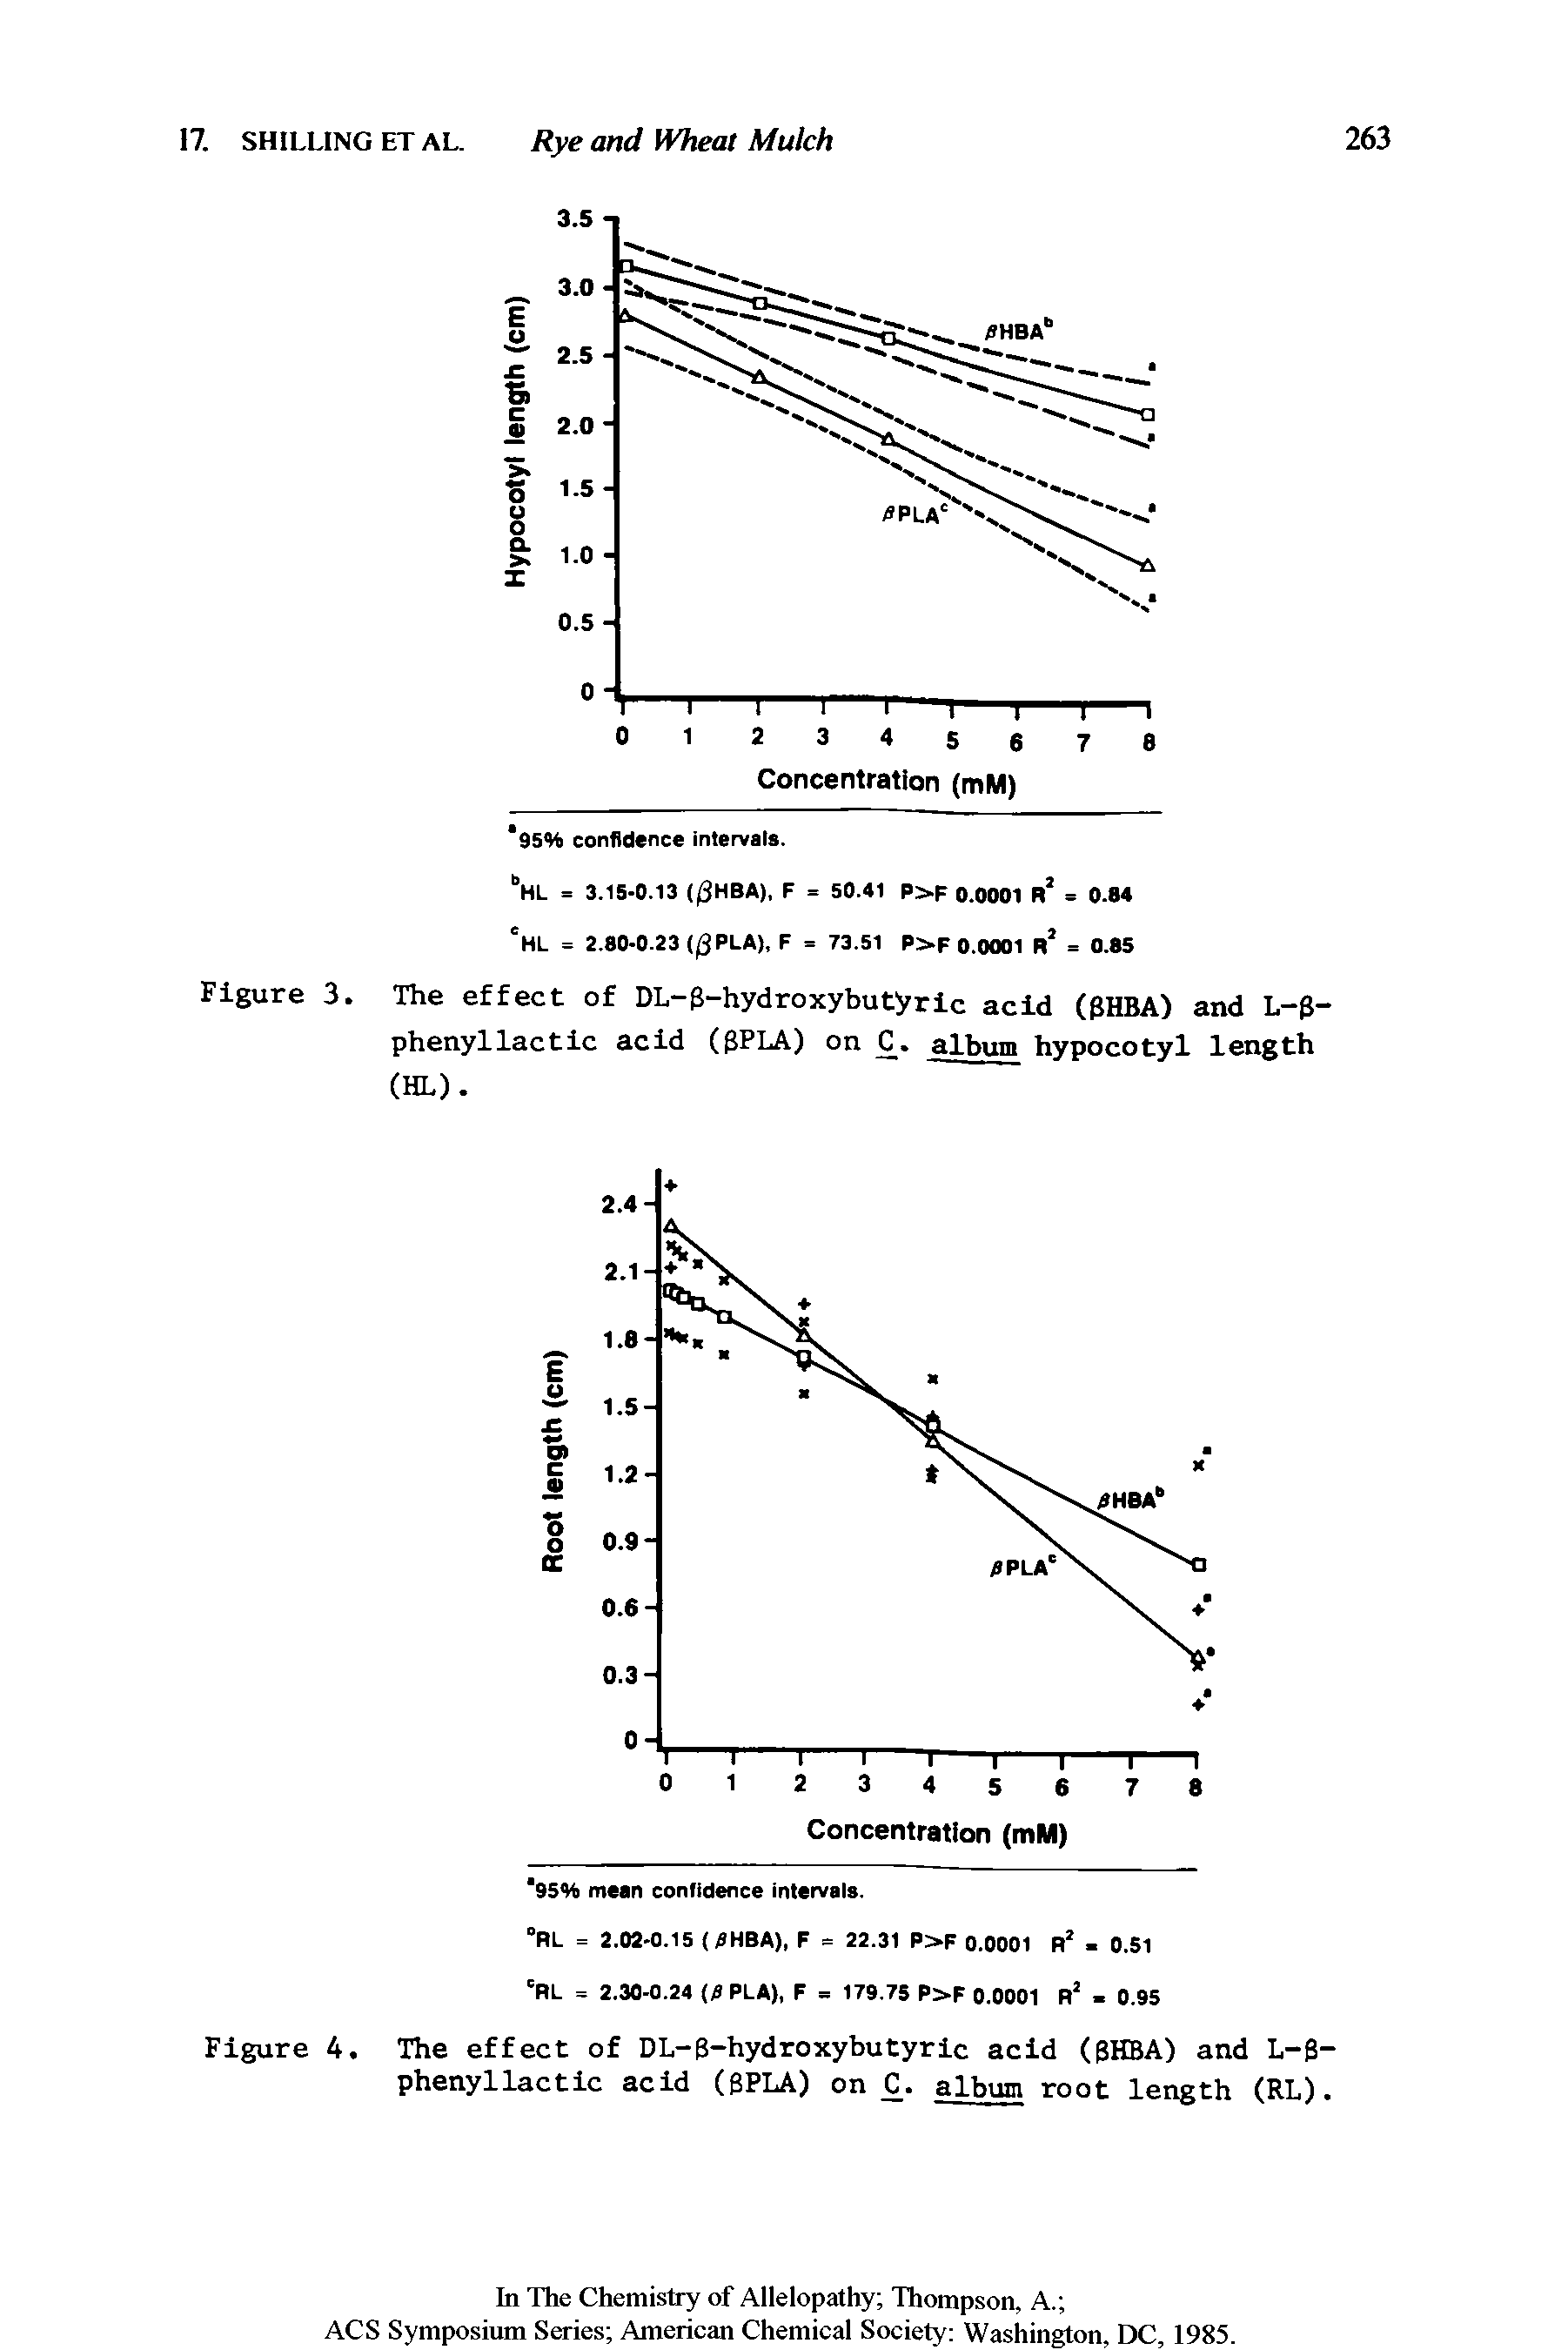 Figure 3. The effect of DL-B-hydroxybutyric acid ( HBA) and L-g-phenyllactic acid (BPLA) on C. album hypocotyl length (HL).